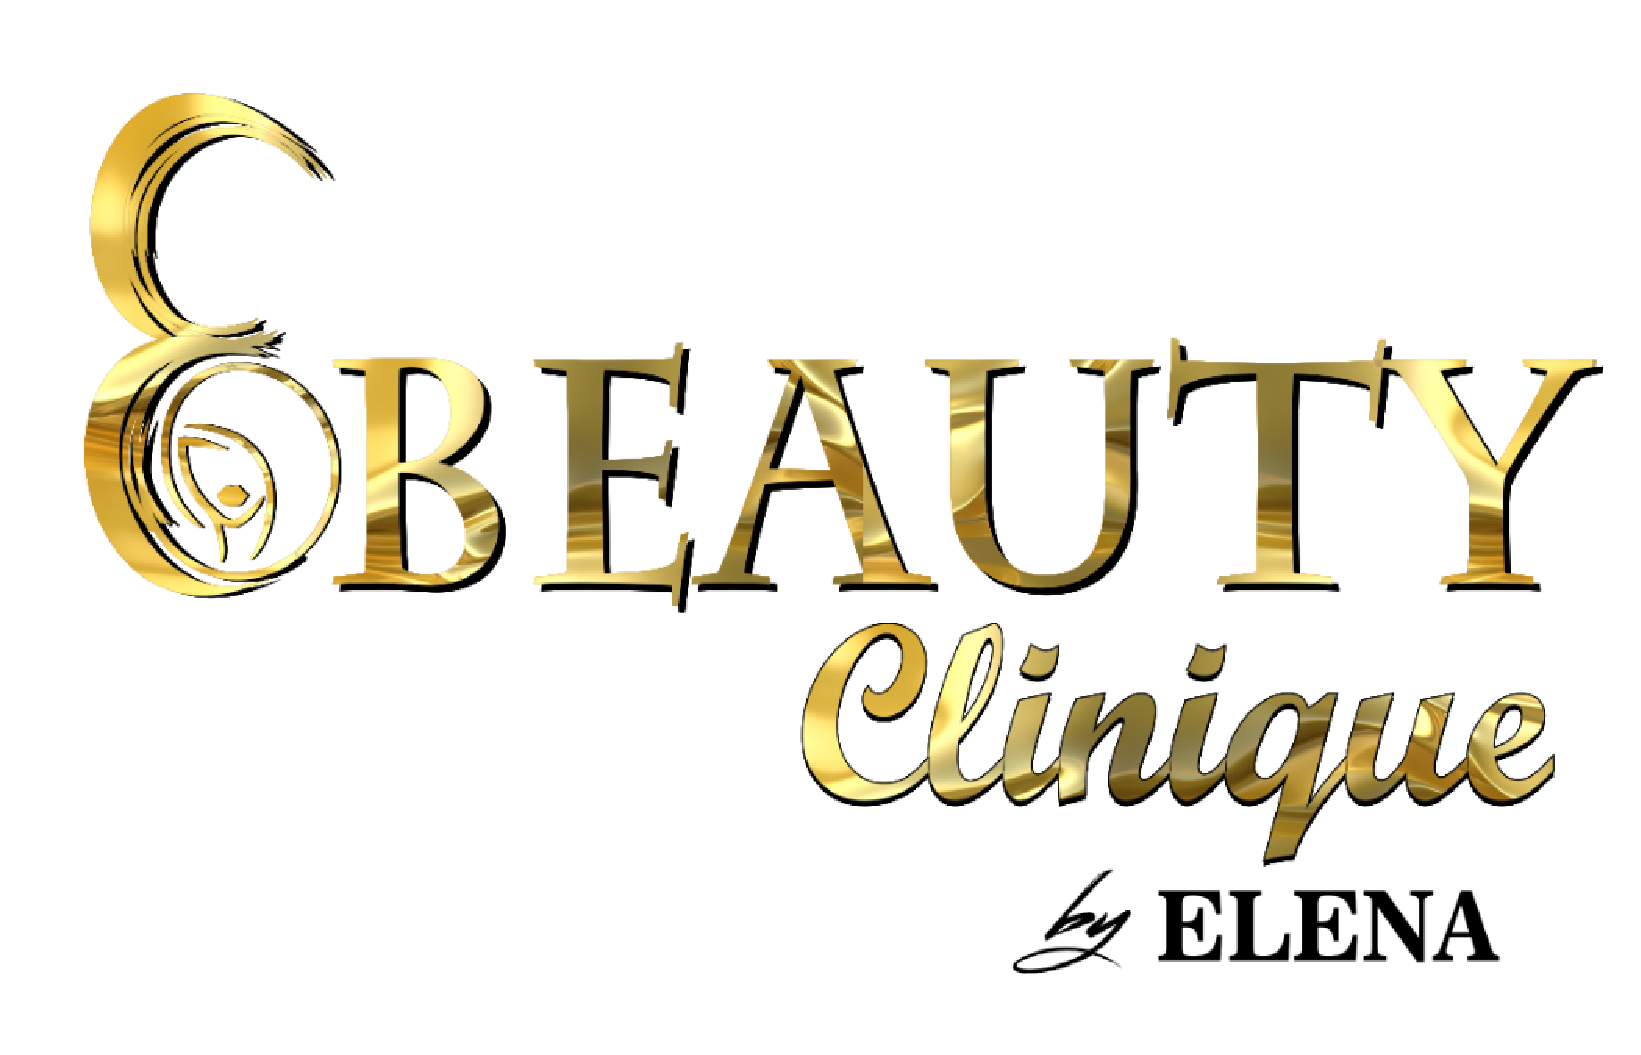 Ebeauty Clinique